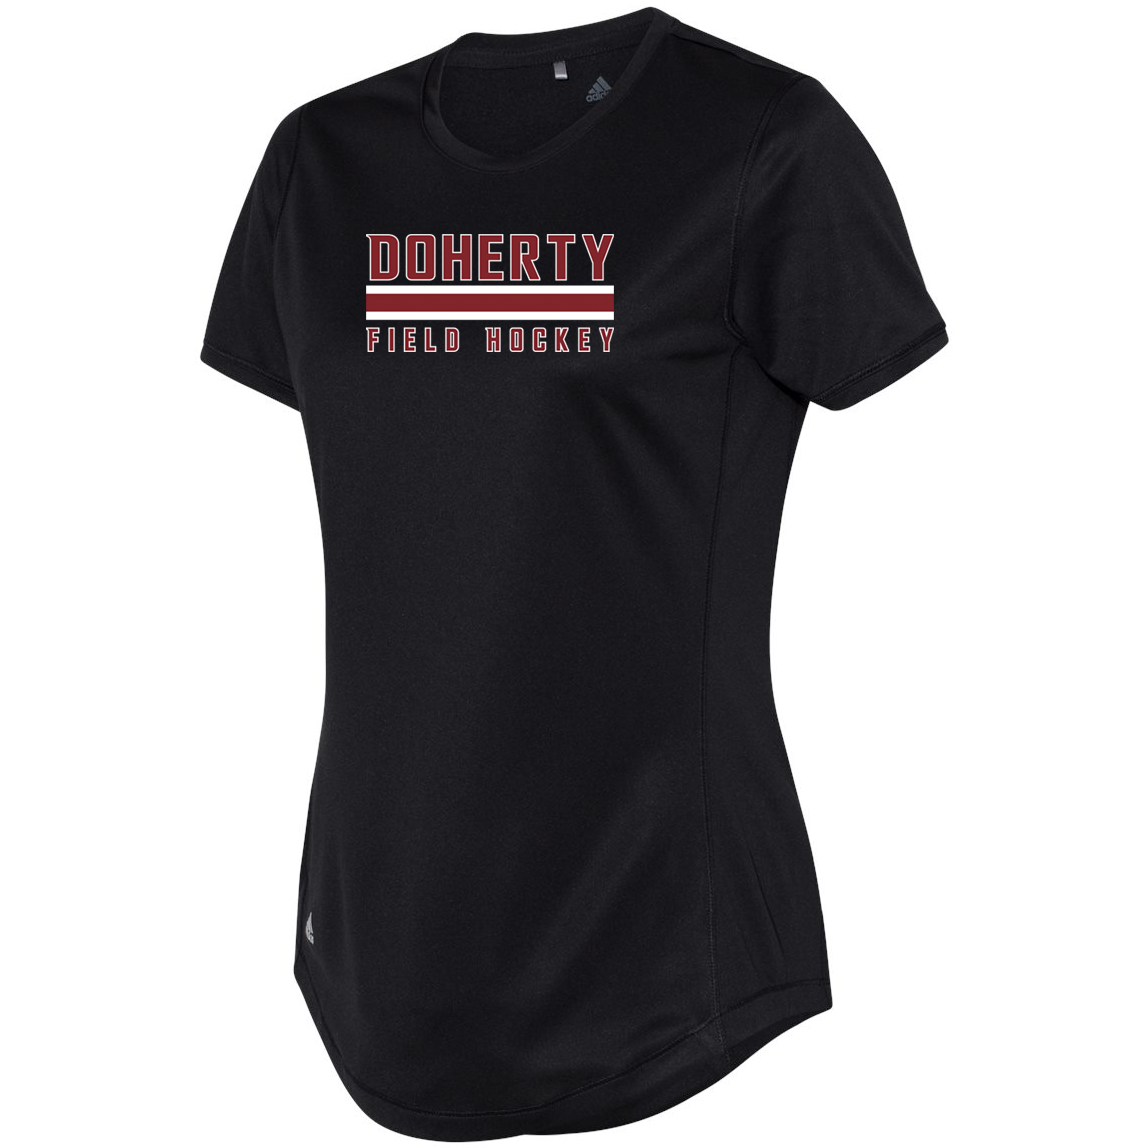 Doherty Field Hockey Women's Adidas Sport T-Shirt